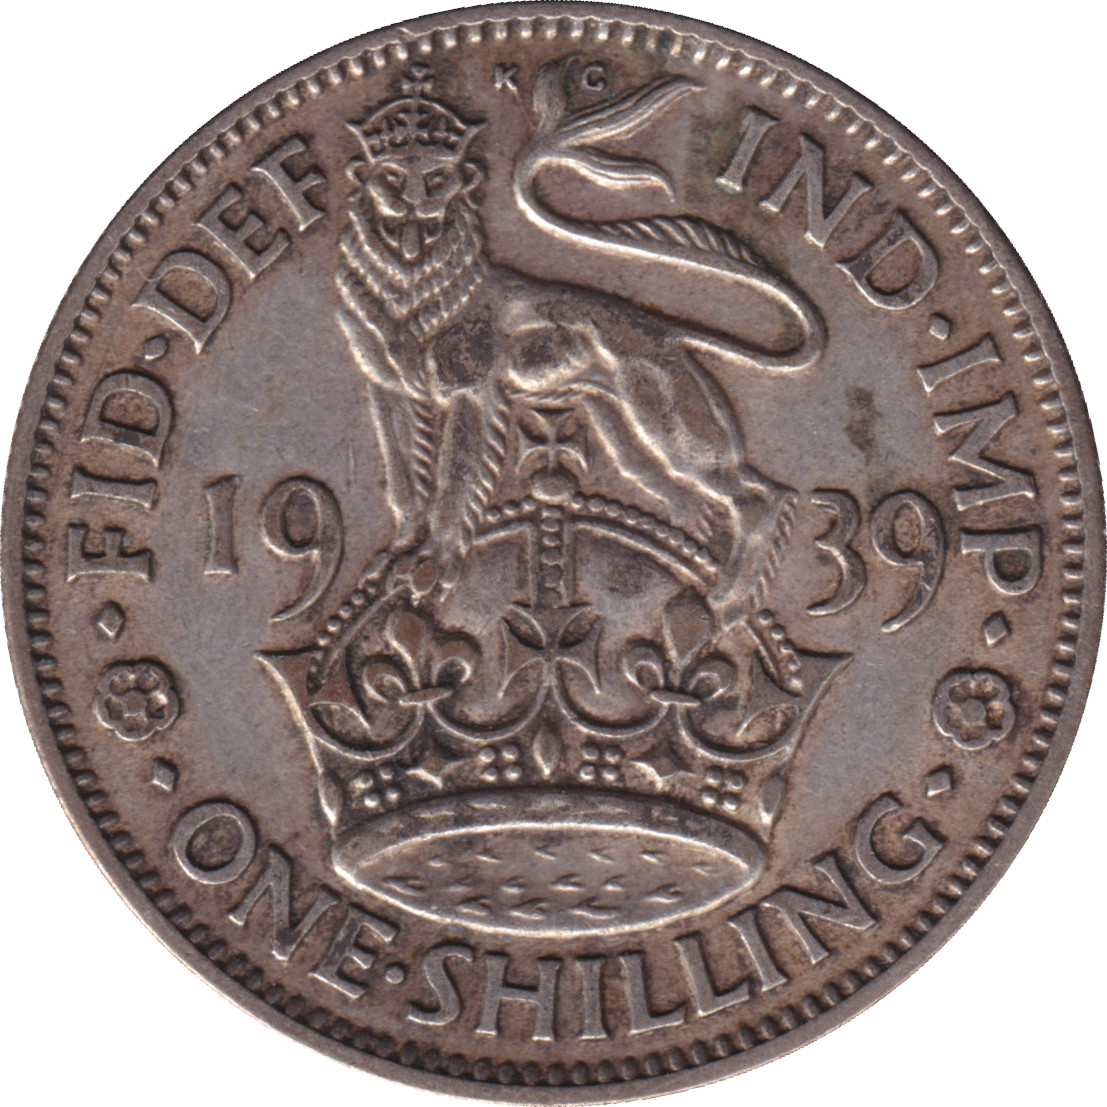 1 shilling - Georges VI - Ecosse